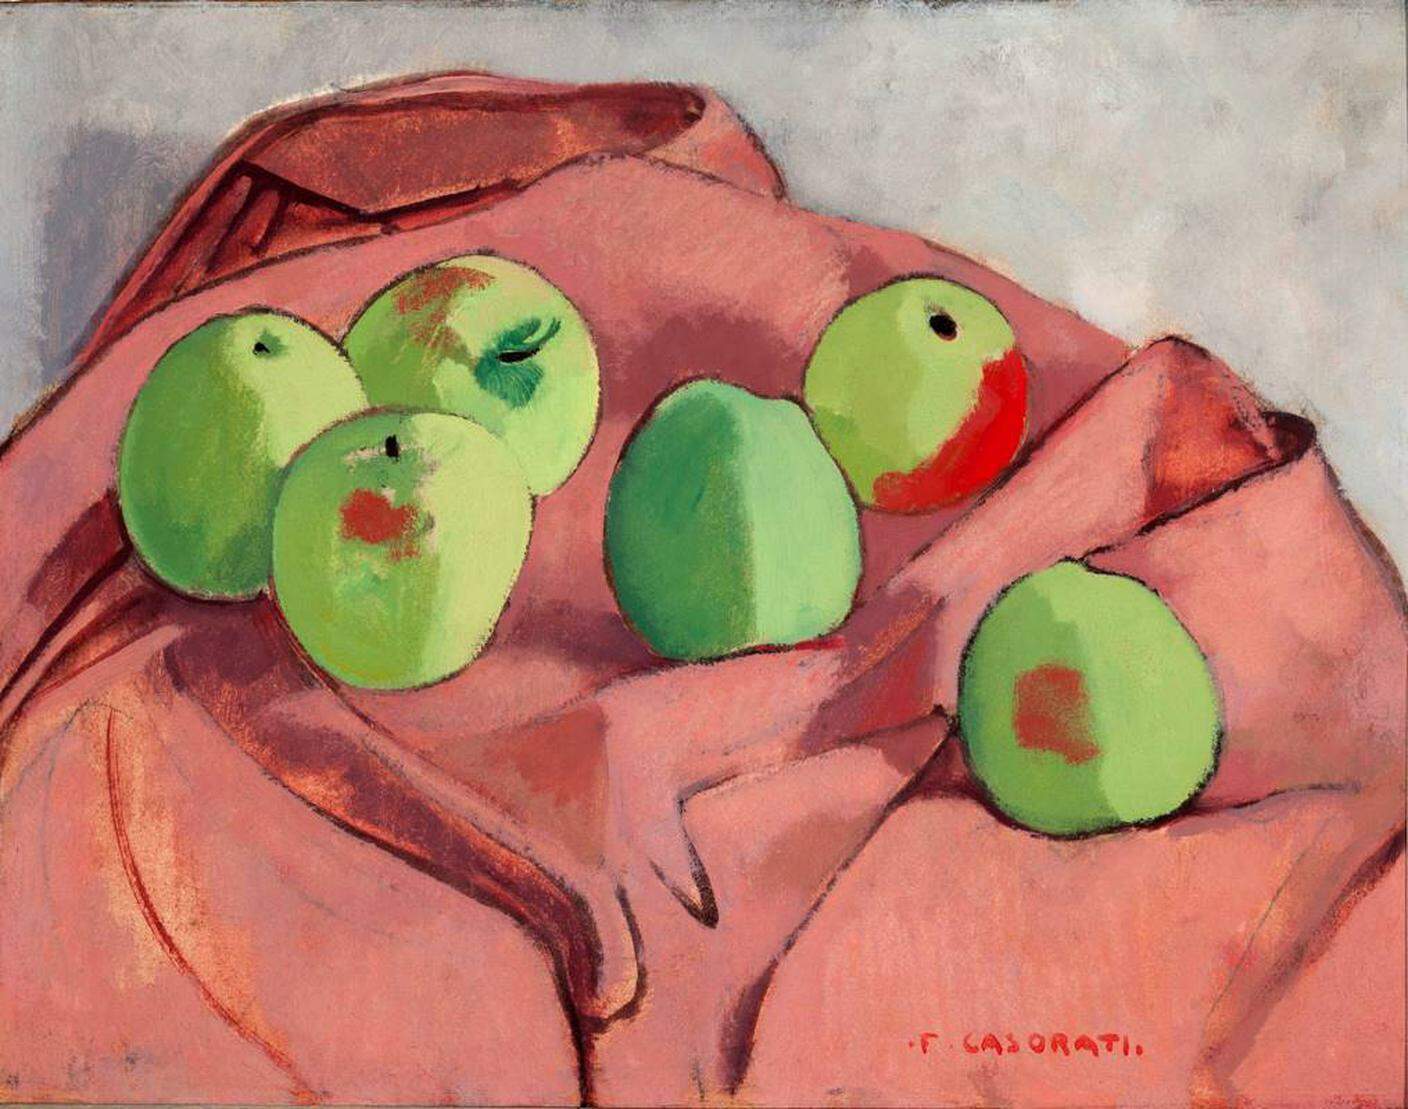 Felice Casorati, Le mele verdi, 1932 